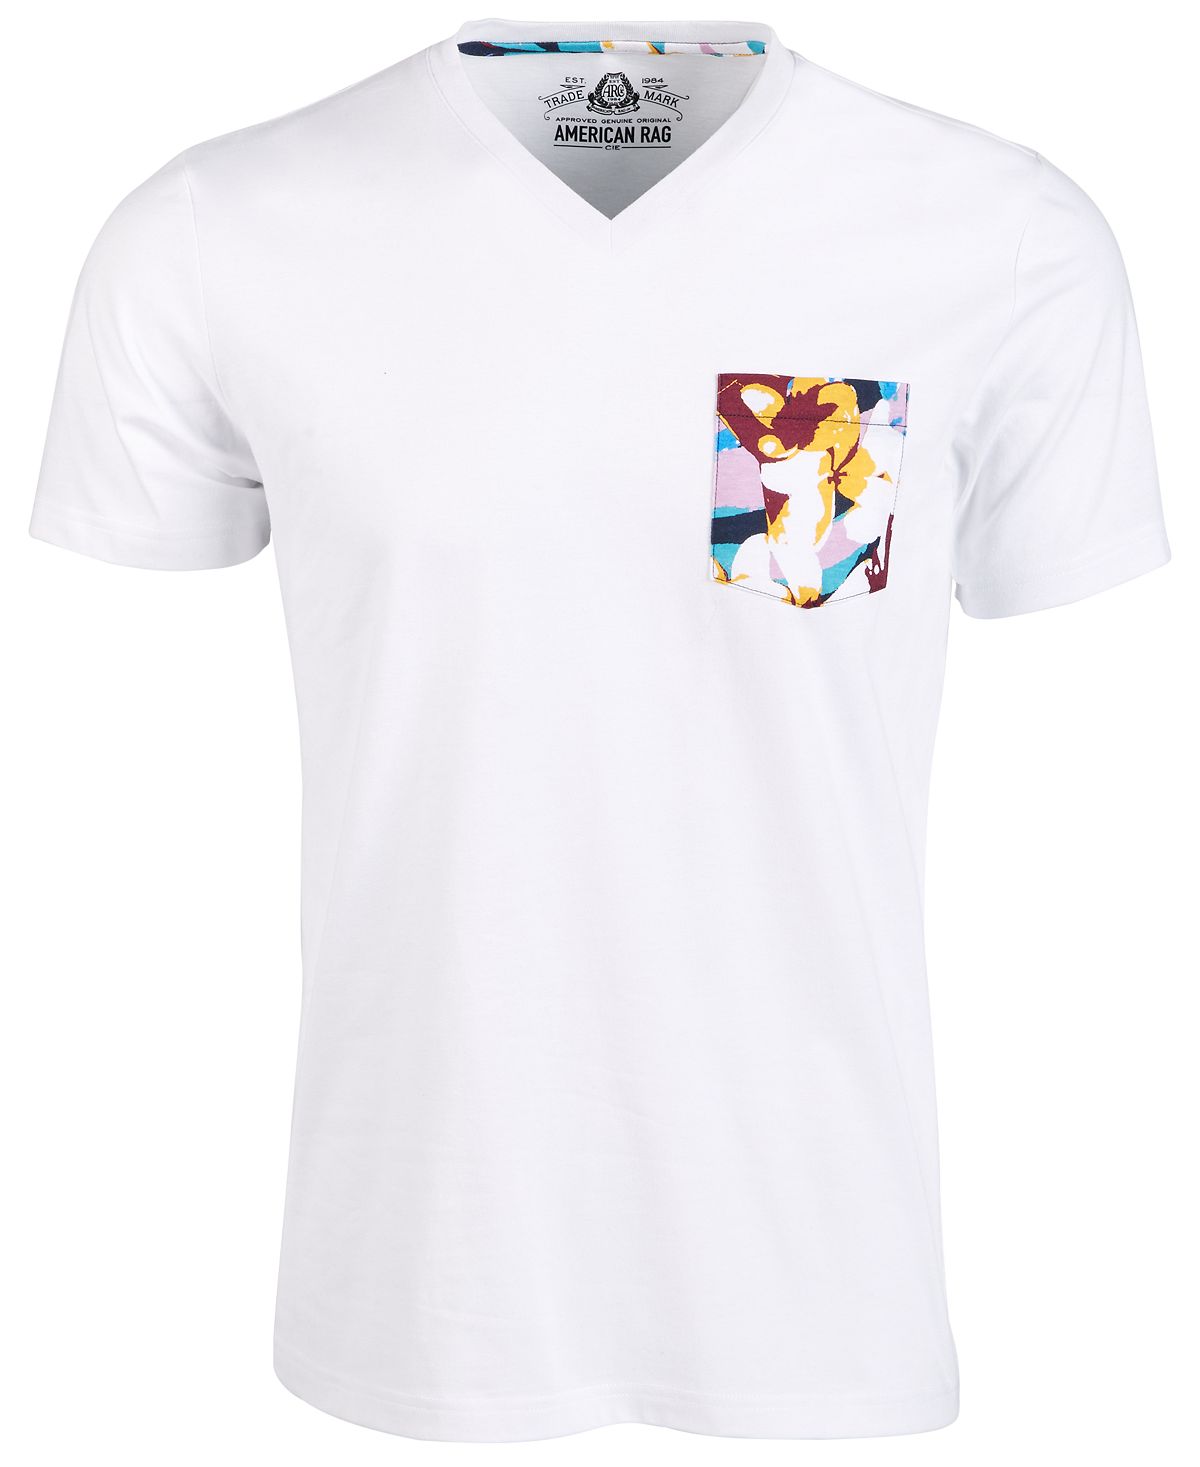 American Rag Floral Pocket T-shirt Bright White